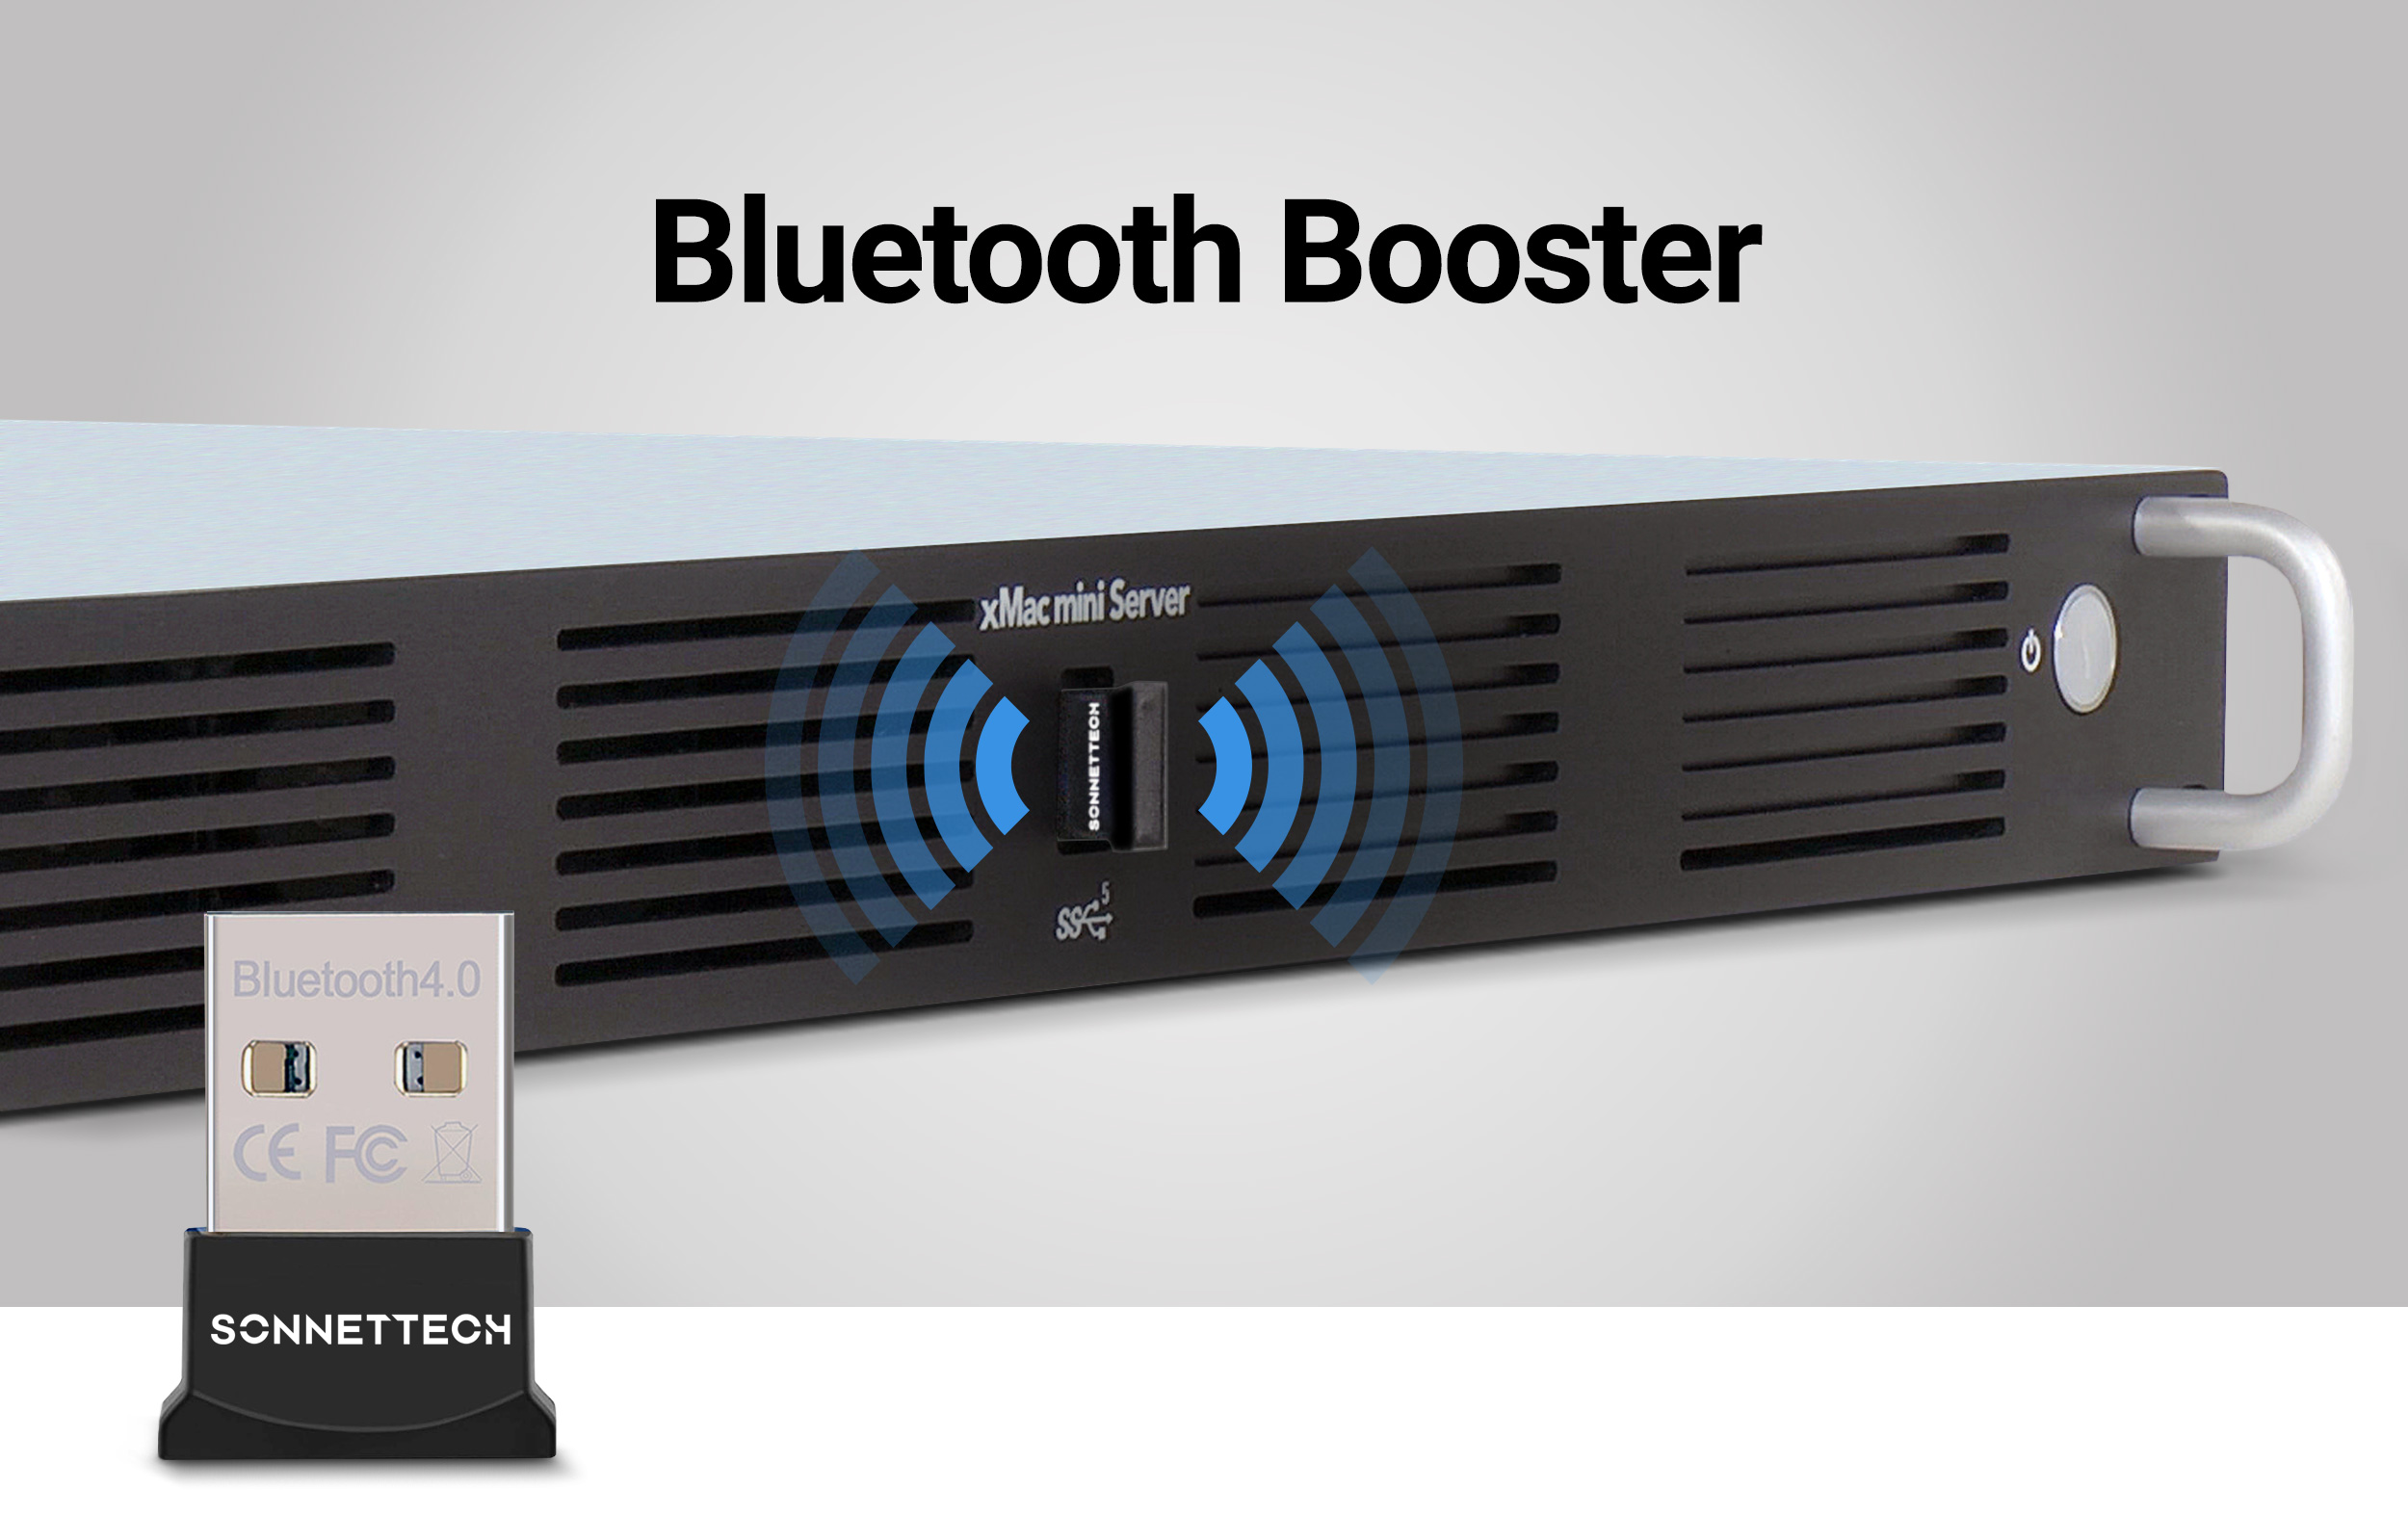 Sonnet Long-Range USB Bluetooth 4.0 Micro Adapter - Bluetooth Booster